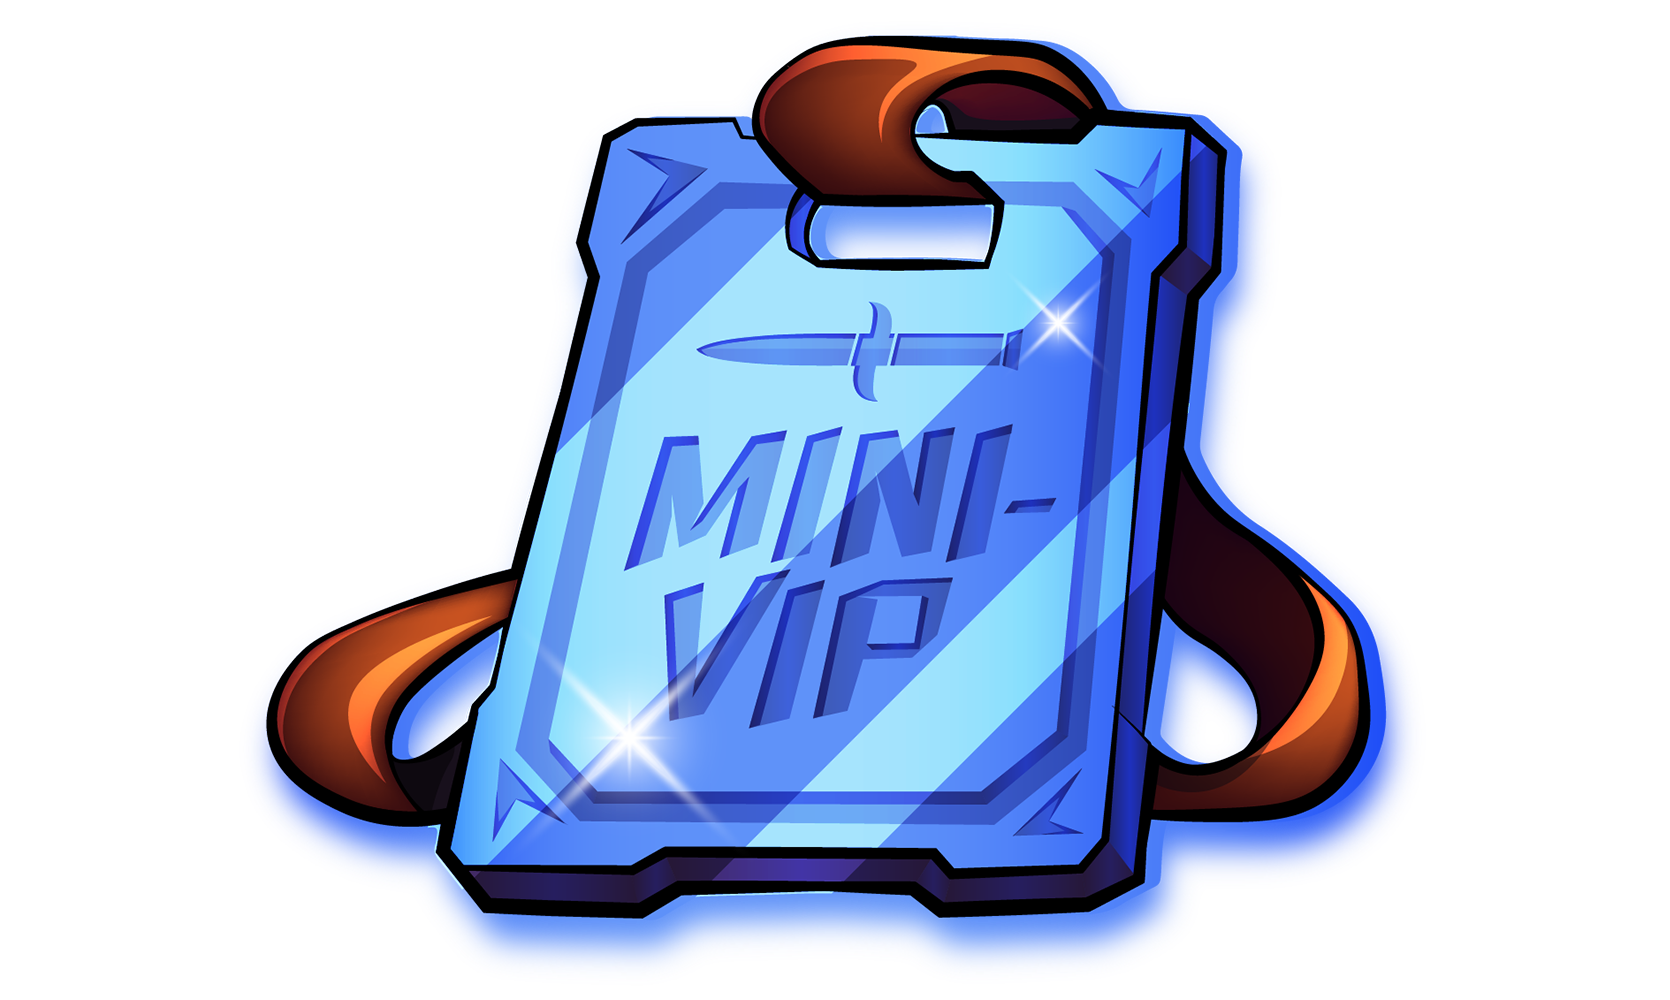 MiniVIP